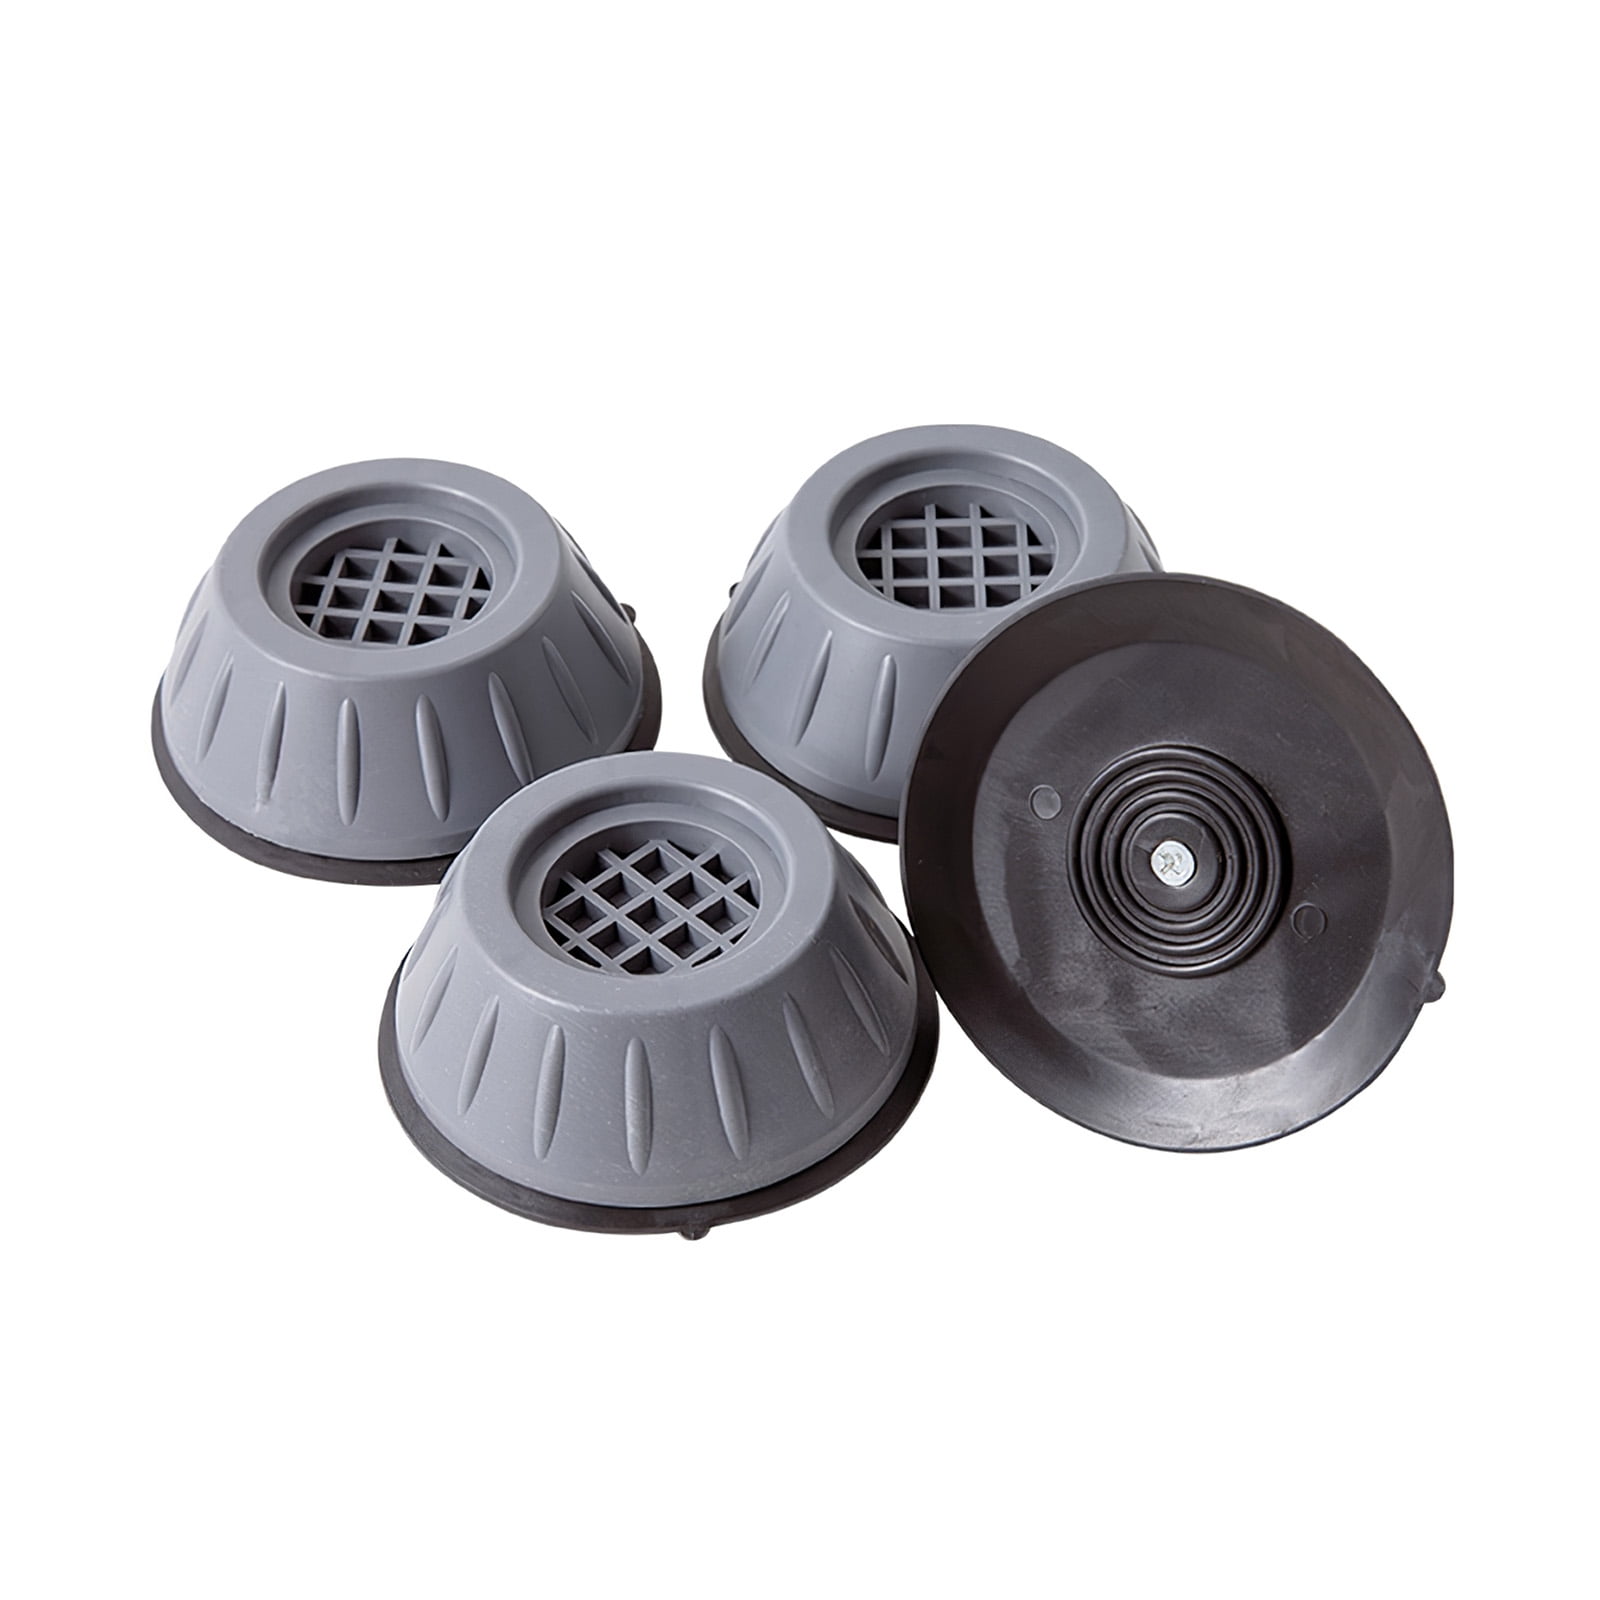 Anti Vibration Pads for Washing Machine W/Hexagrip - Stops Washer Drye –  KOL PET